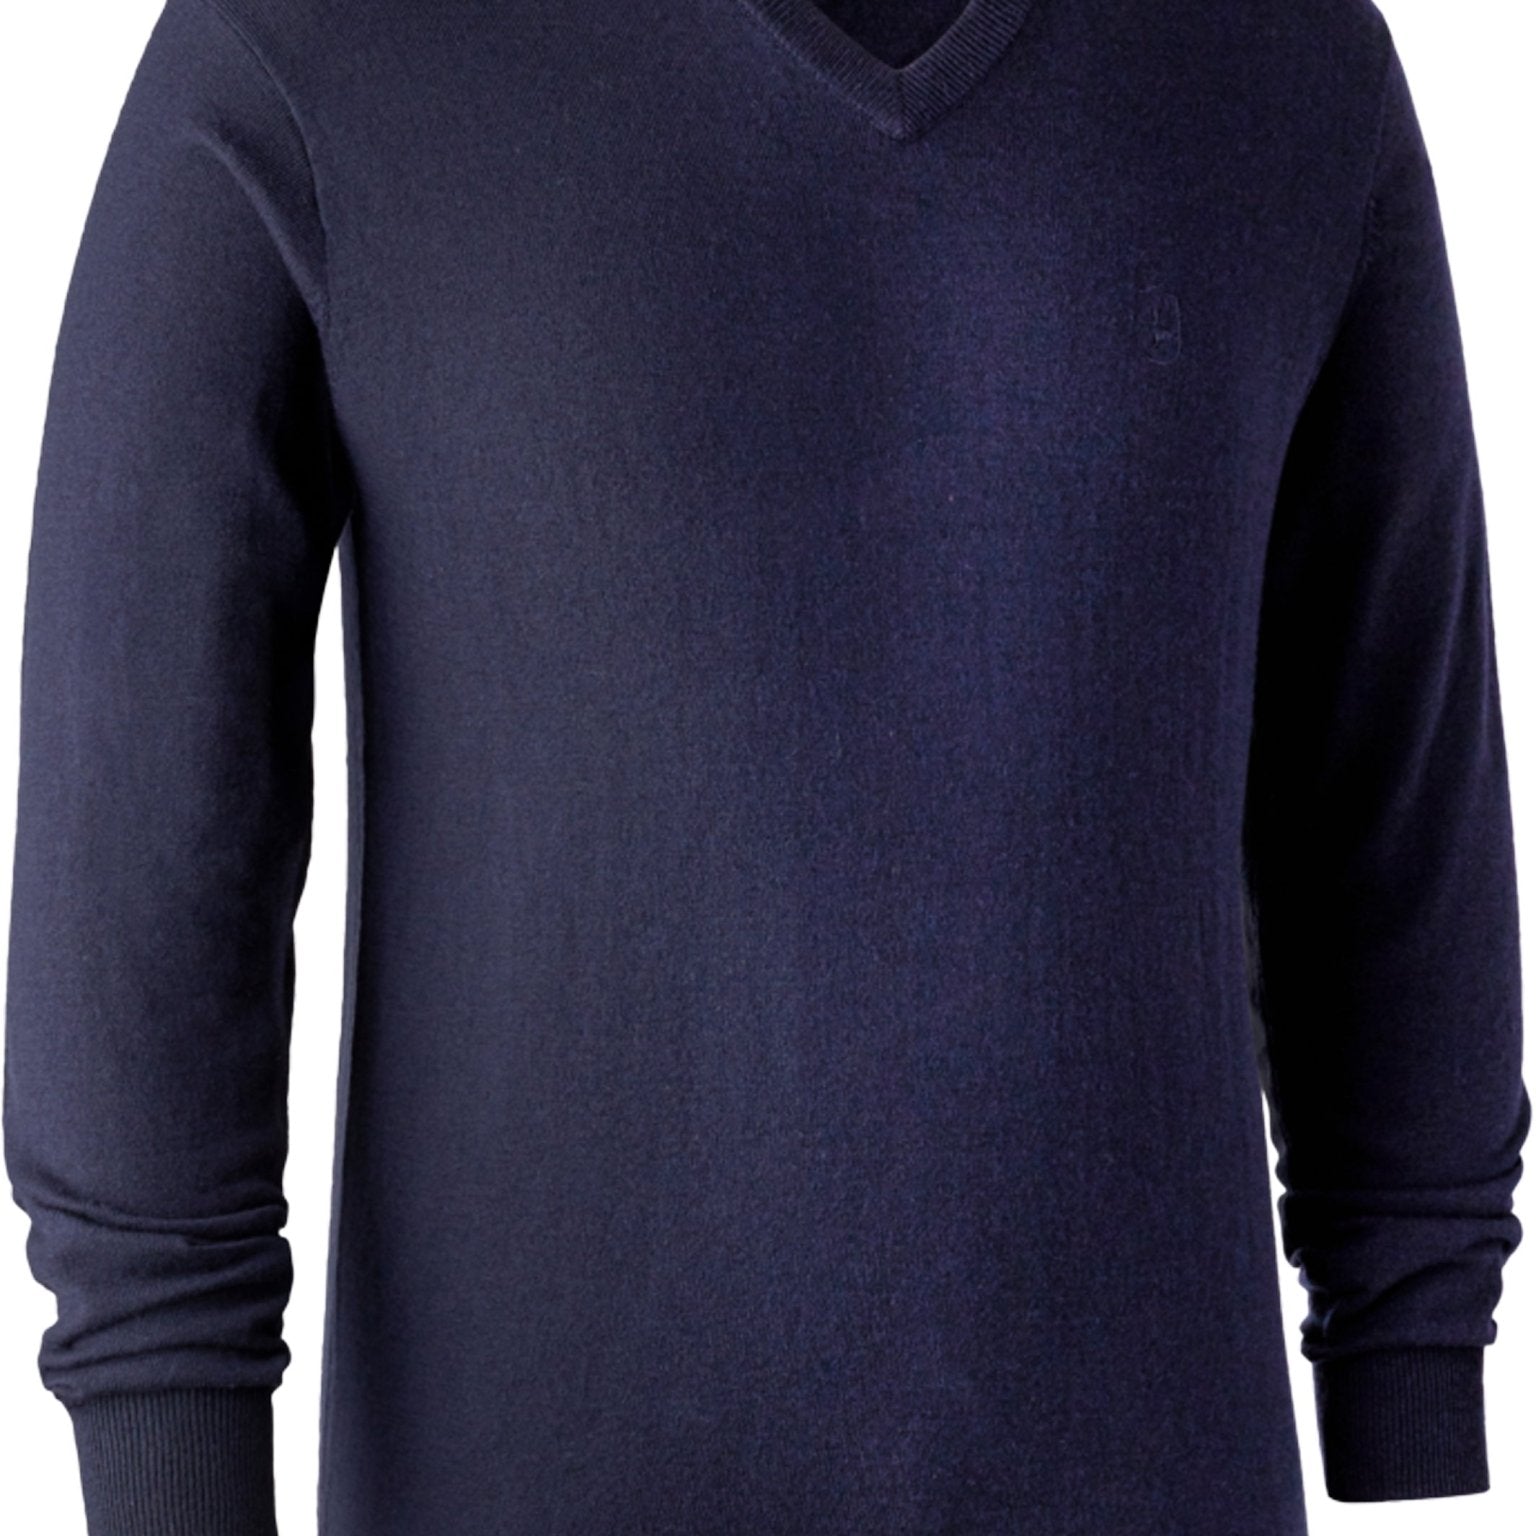 4elementsclothingDeerhunterDeerhunter - Kingston knit Pullover / Jumper - V NeckKnitwear